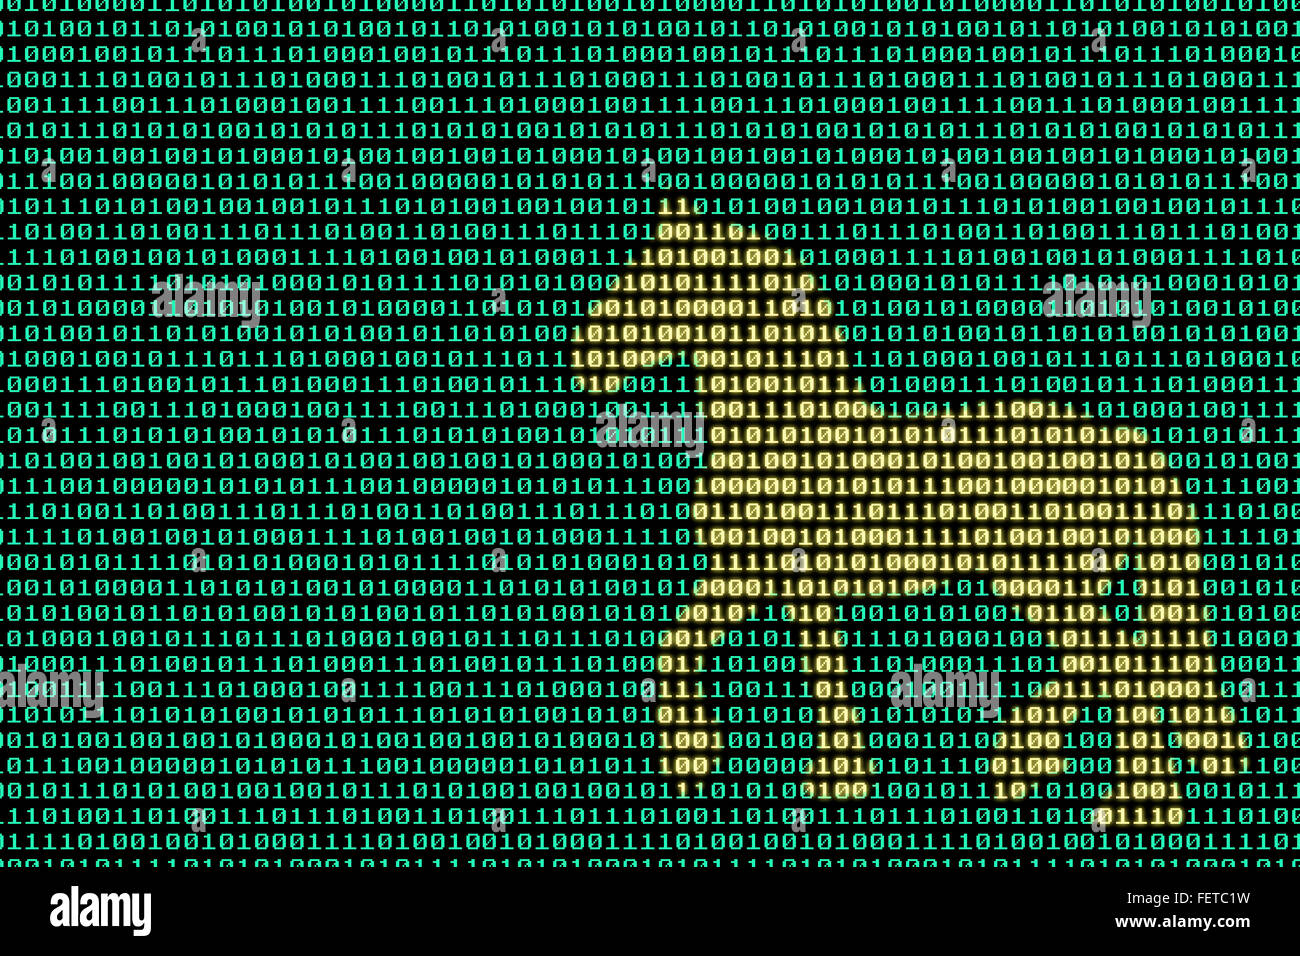 11 photo/game apps hide Trojan horse virus #phonesecurity #internet